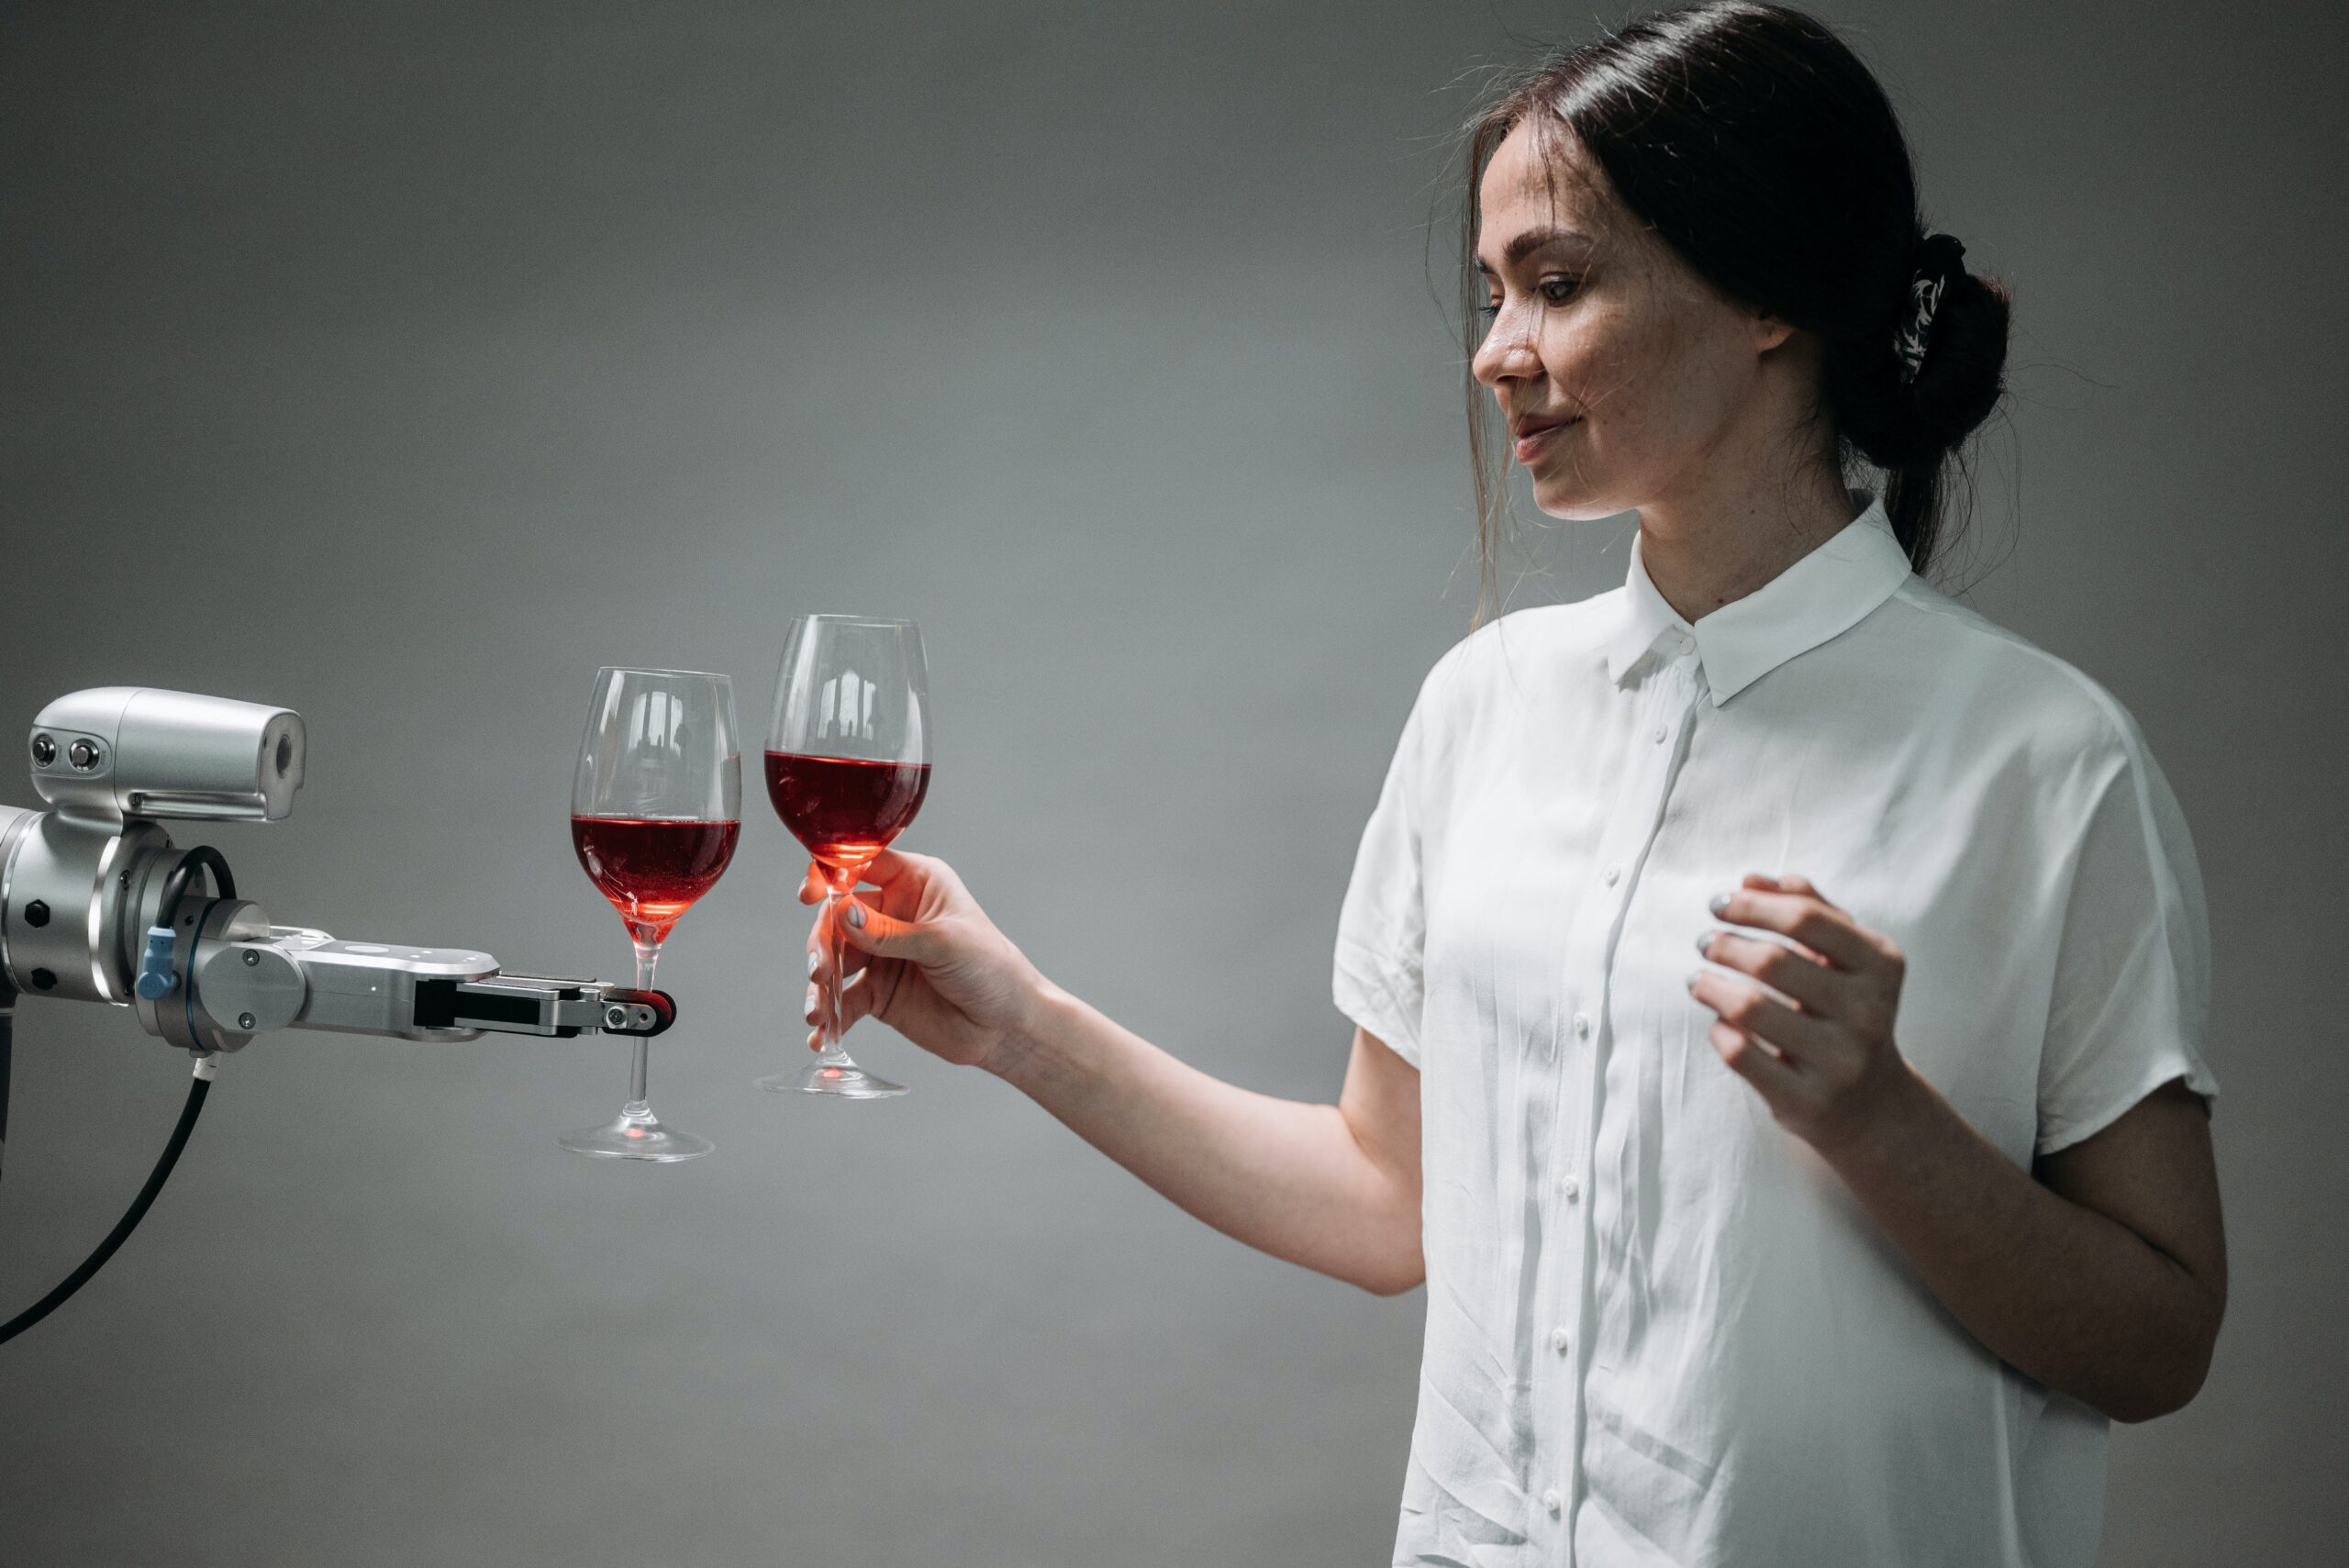 a robot holding a wine